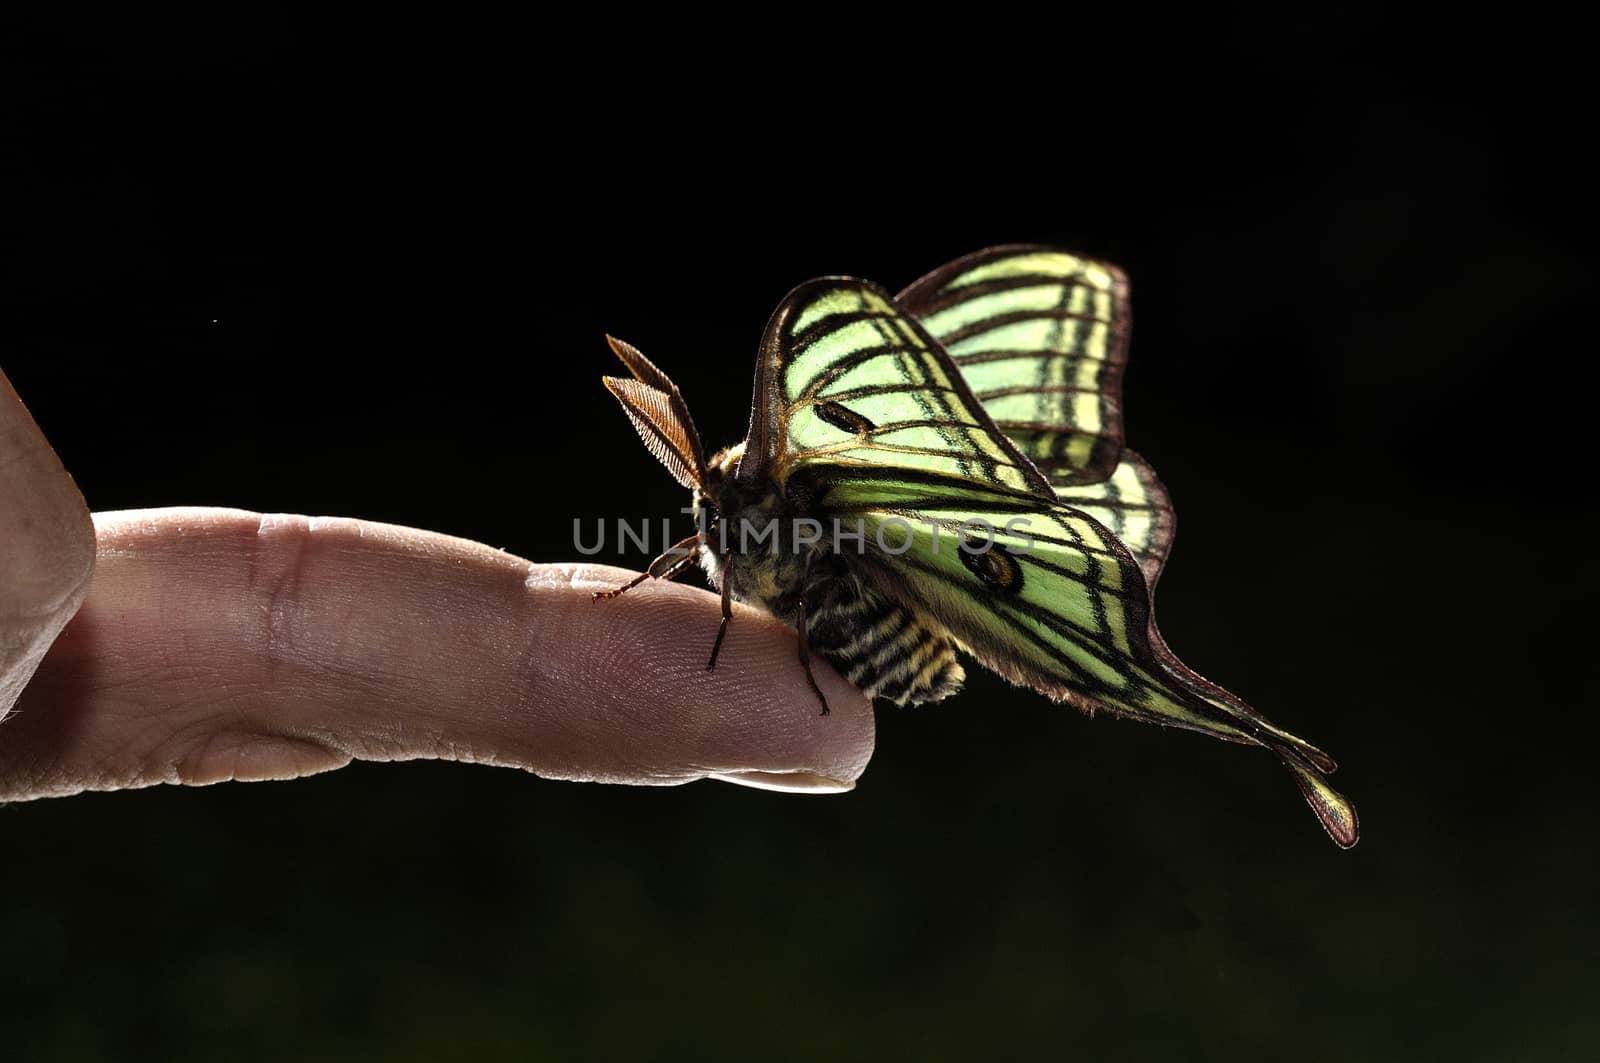 Elizabethan butterfly (Graellsia isabelae), on one finger, Spain by jalonsohu@gmail.com